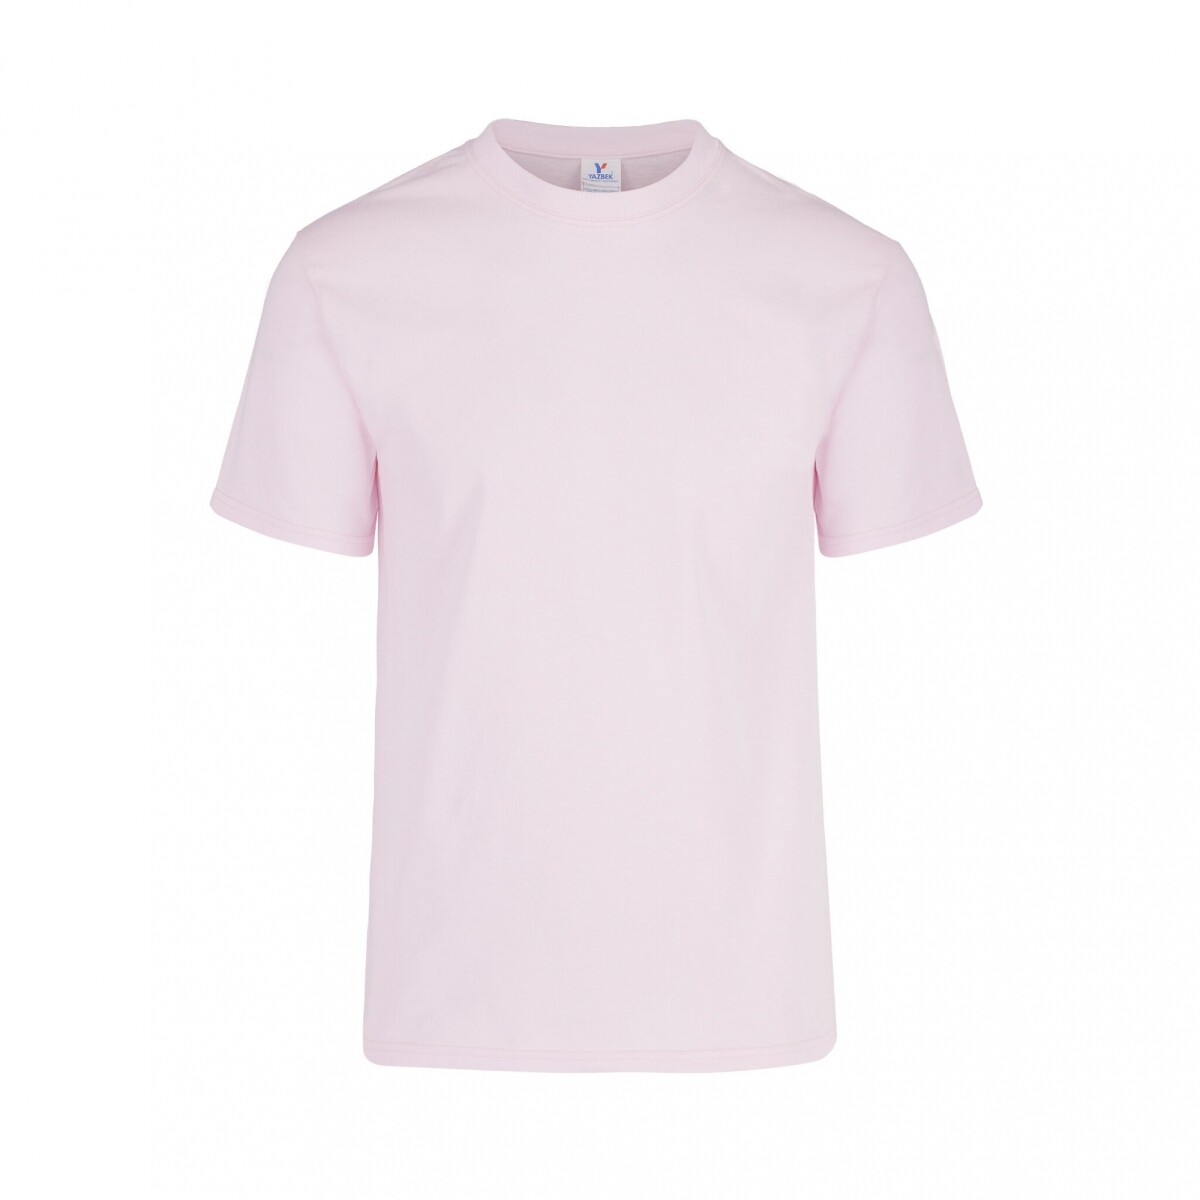 Camiseta a la base peso completo - Rosa pastel 